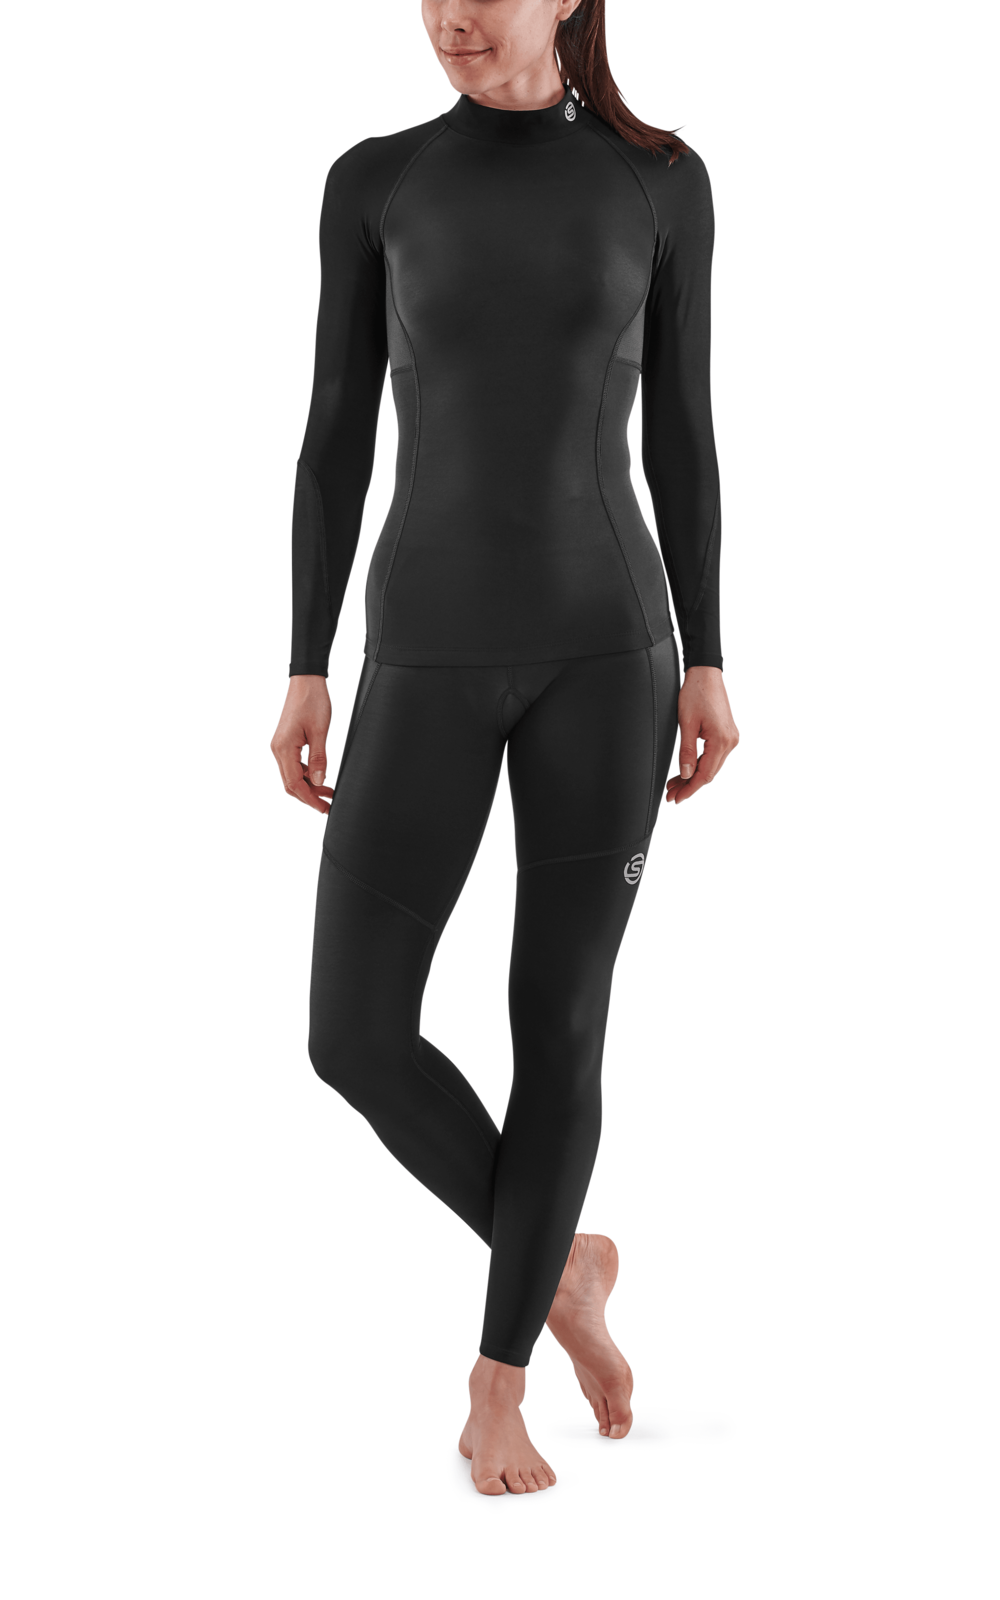 SKINS SERIES-3 Women's Thermal Long Sleeve Top Black – Skins Compression  Australia